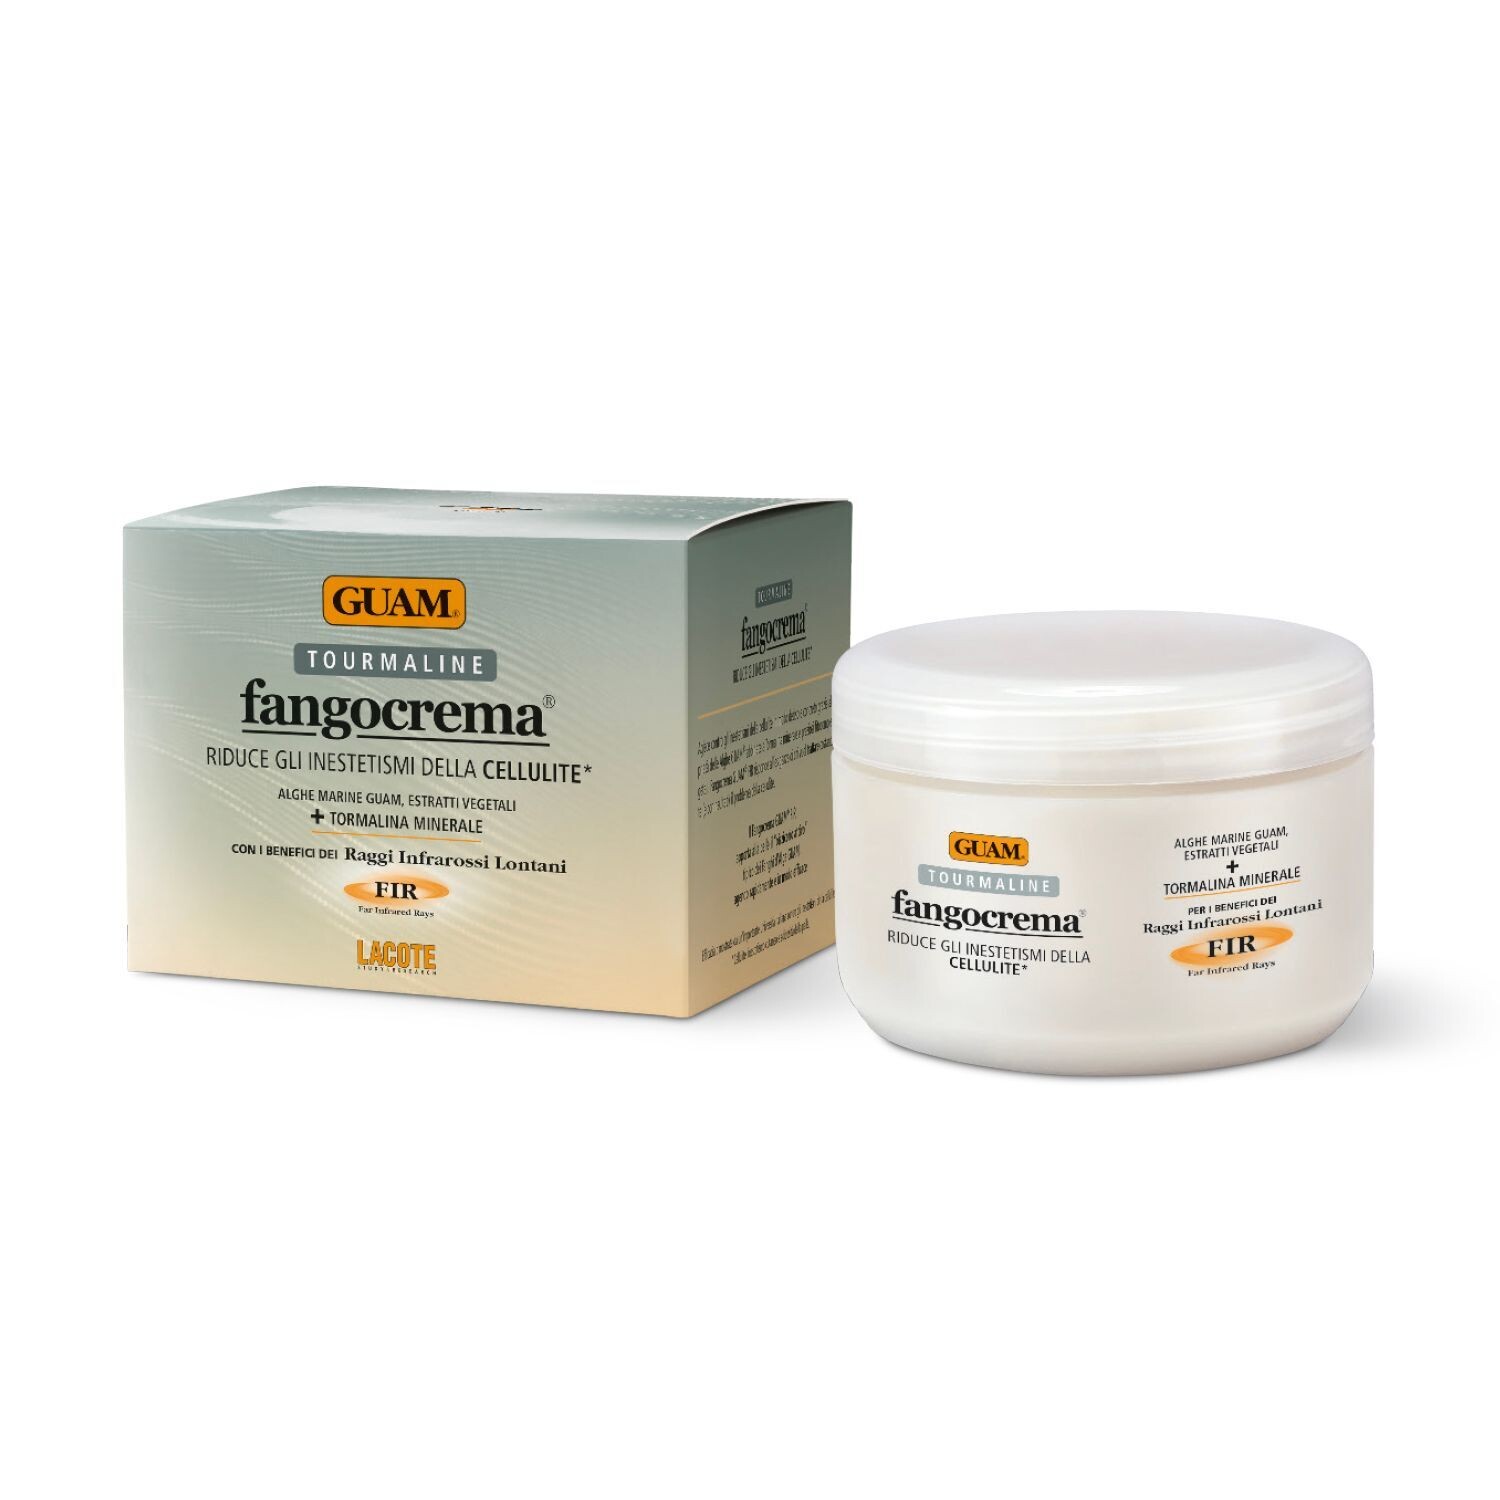 Fangocrema – Original Anti-Cellulite Cream with FIR (300ml)